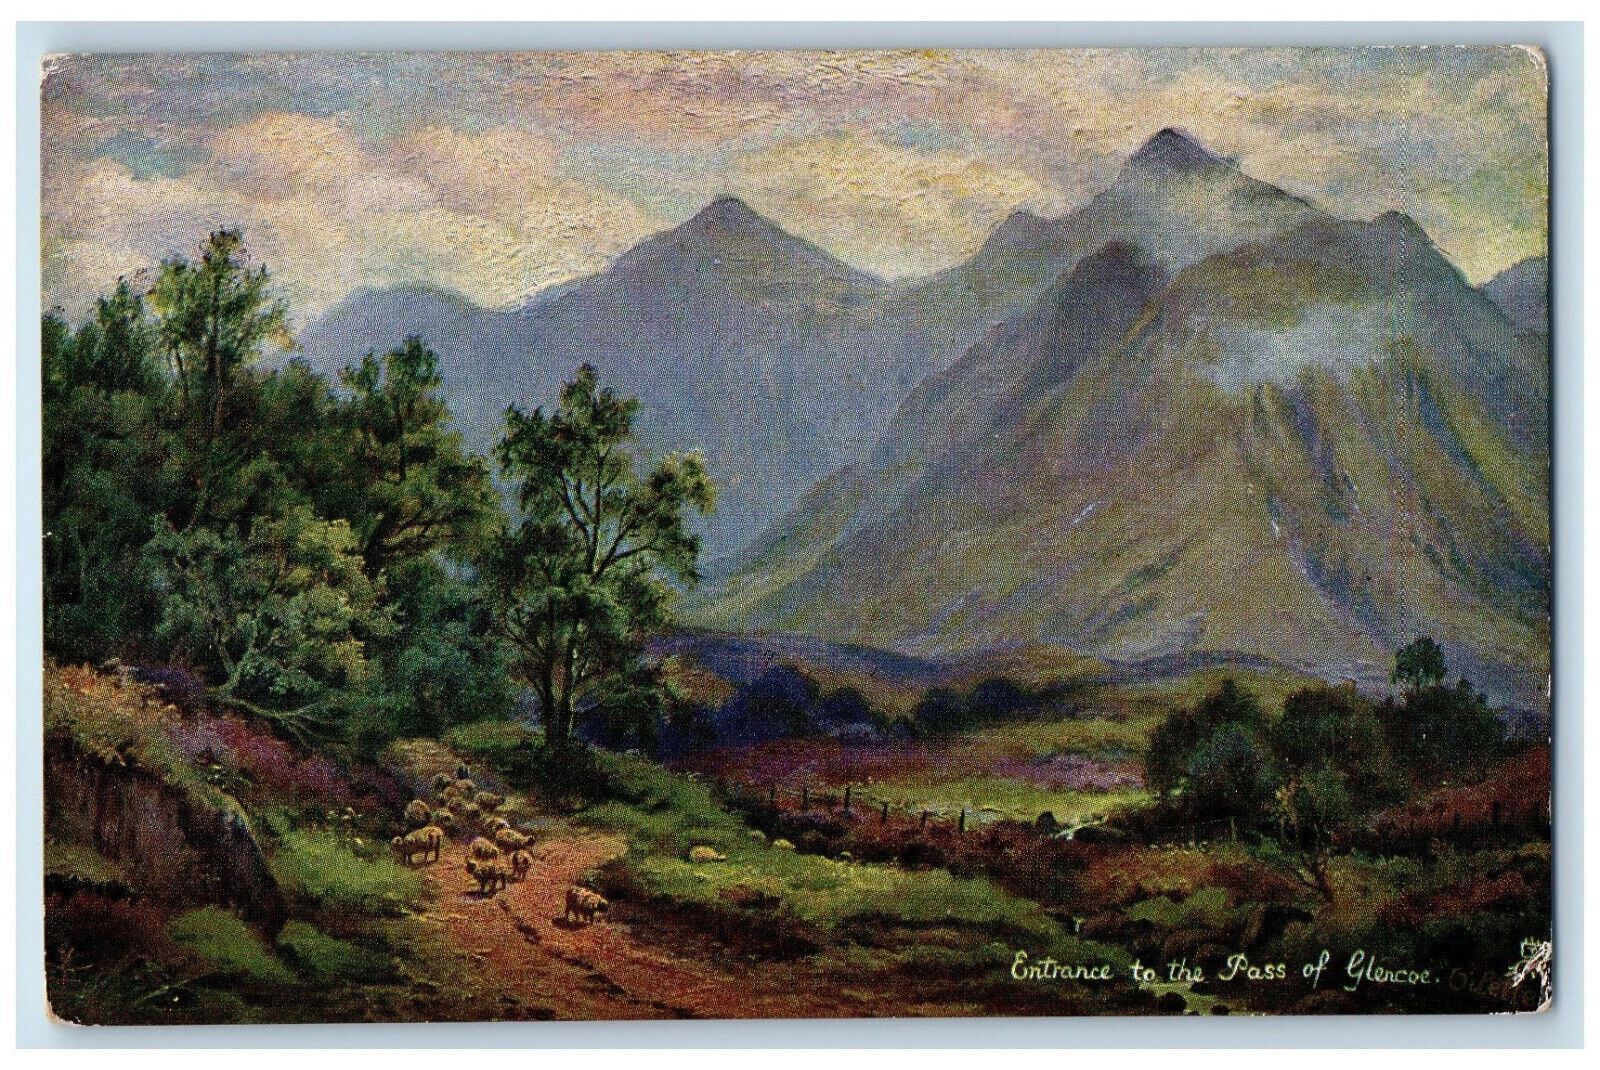 c1910 Entrance to the Pass of Glencoe Antique Oilette Tuck Art Postcard